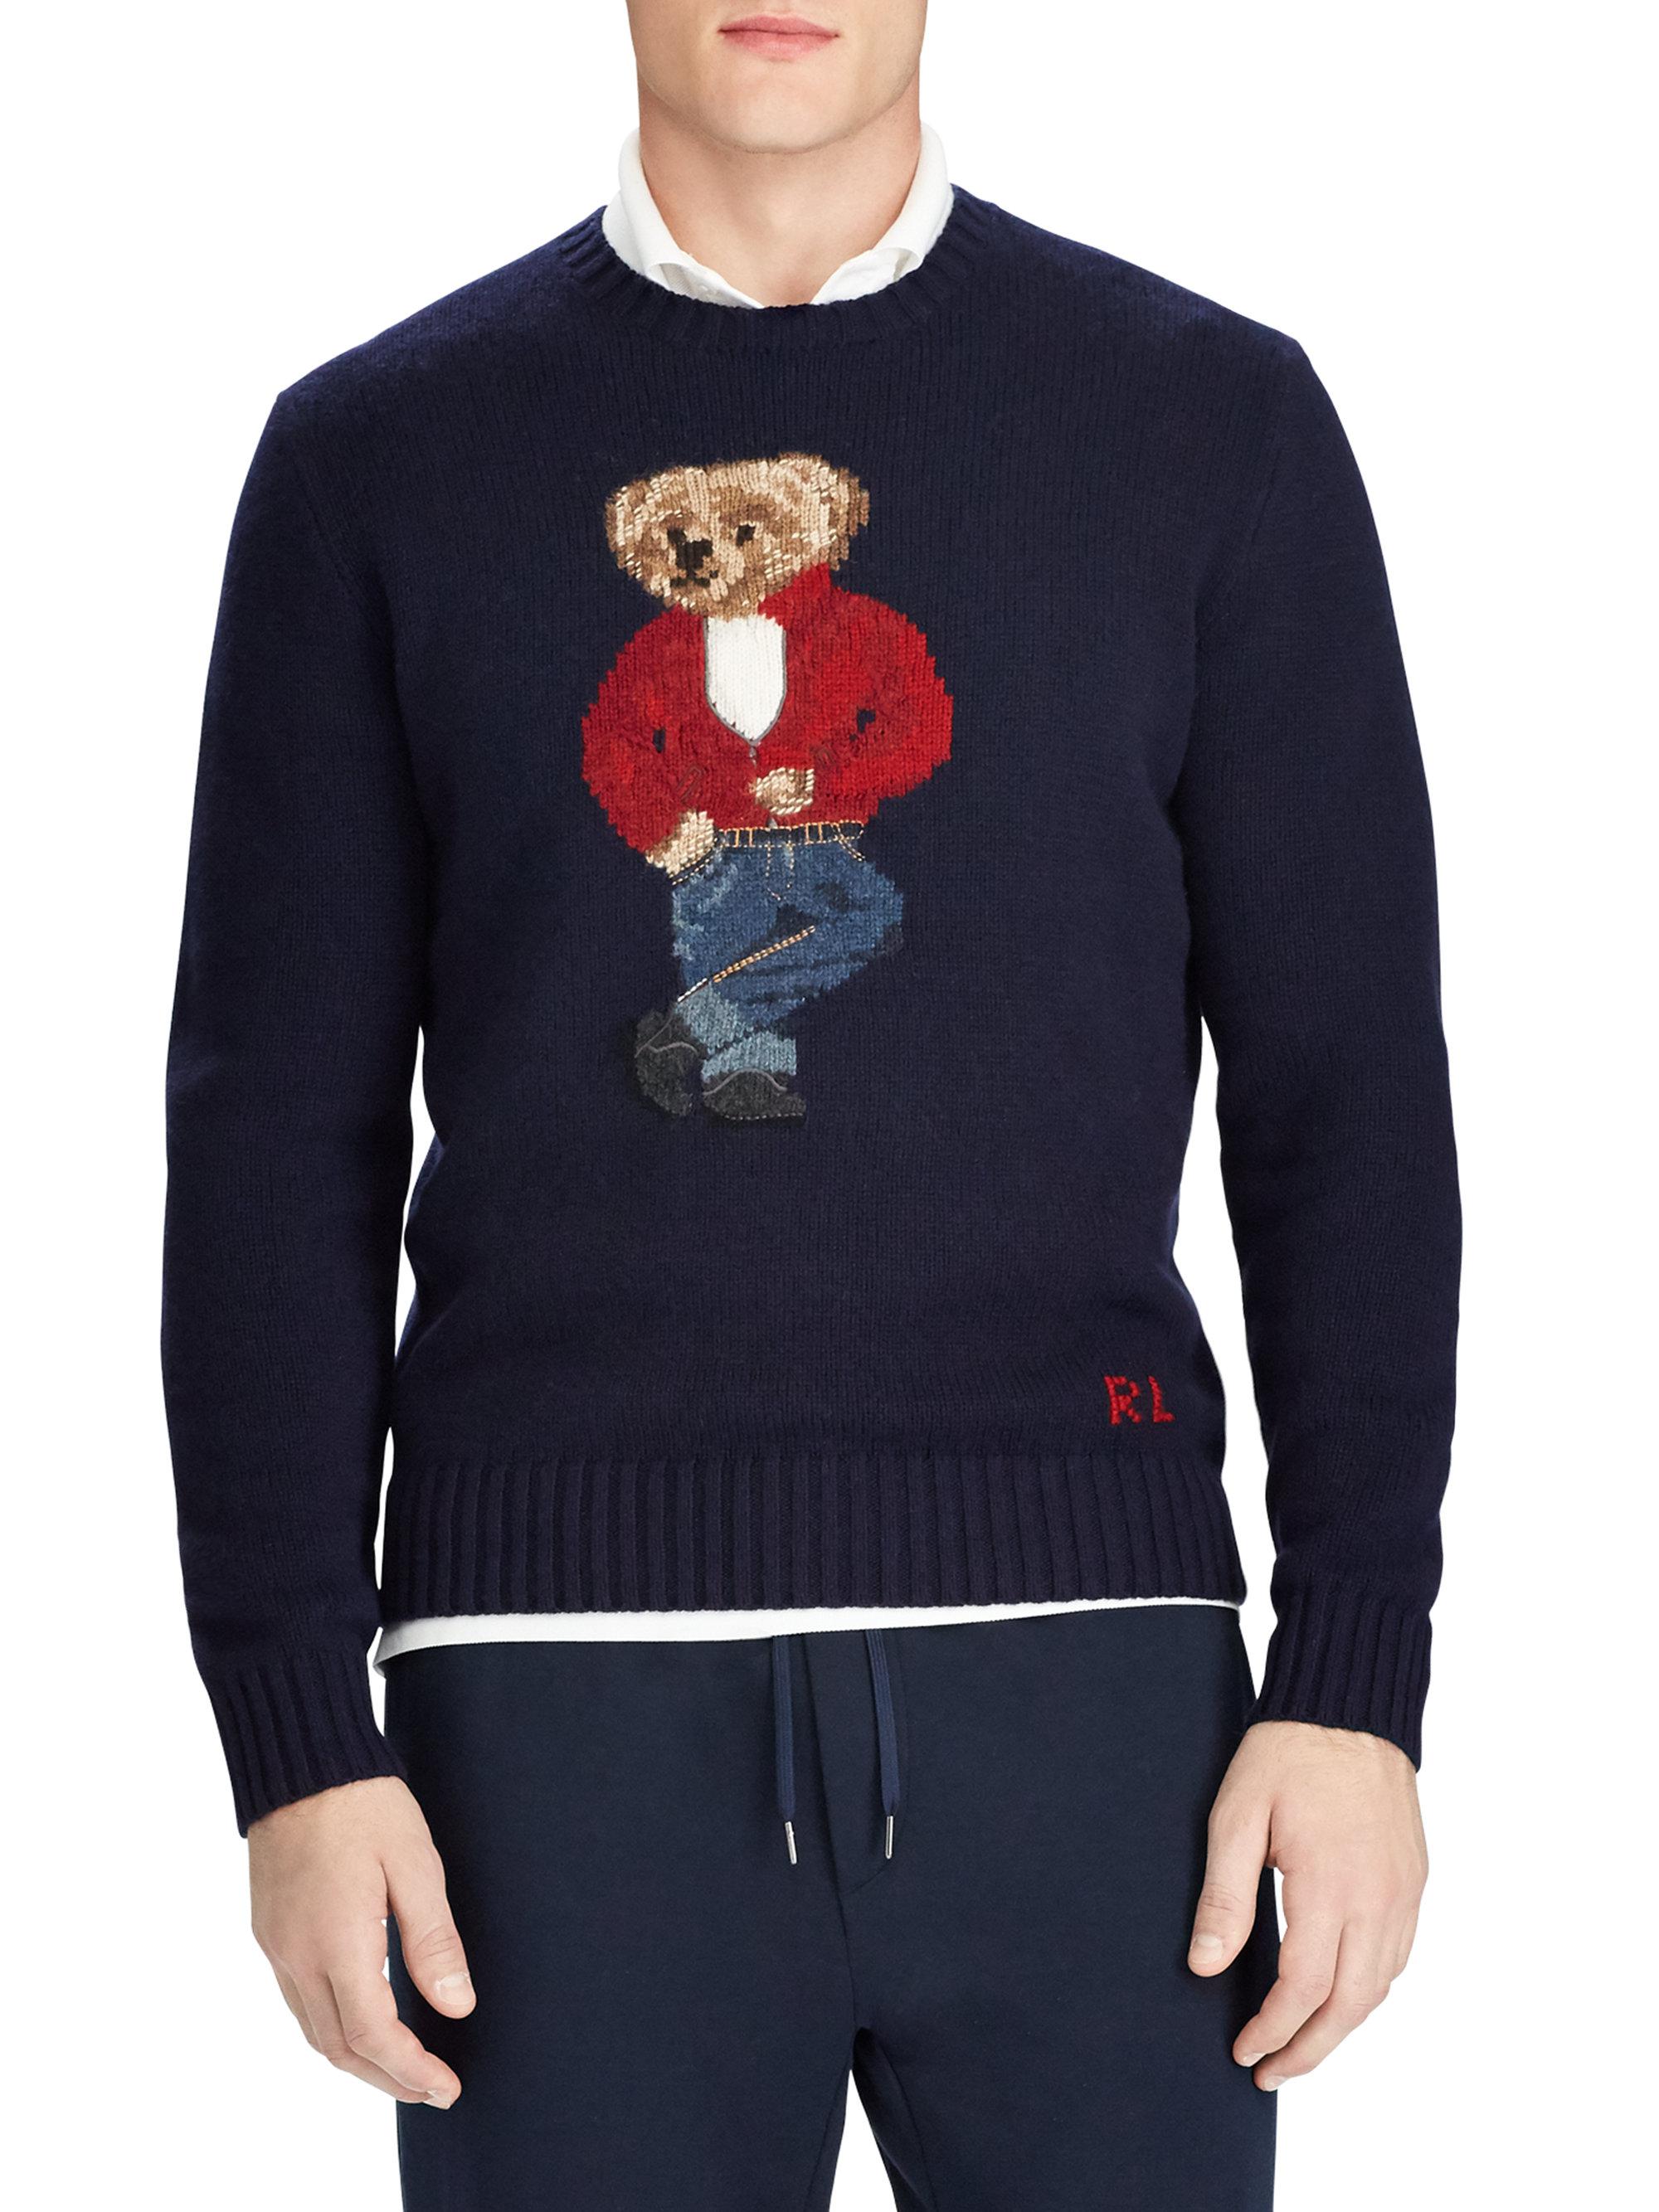 Polo Ralph Lauren Rebel Bear Wool Crewneck Sweater in Blue for Men - Lyst